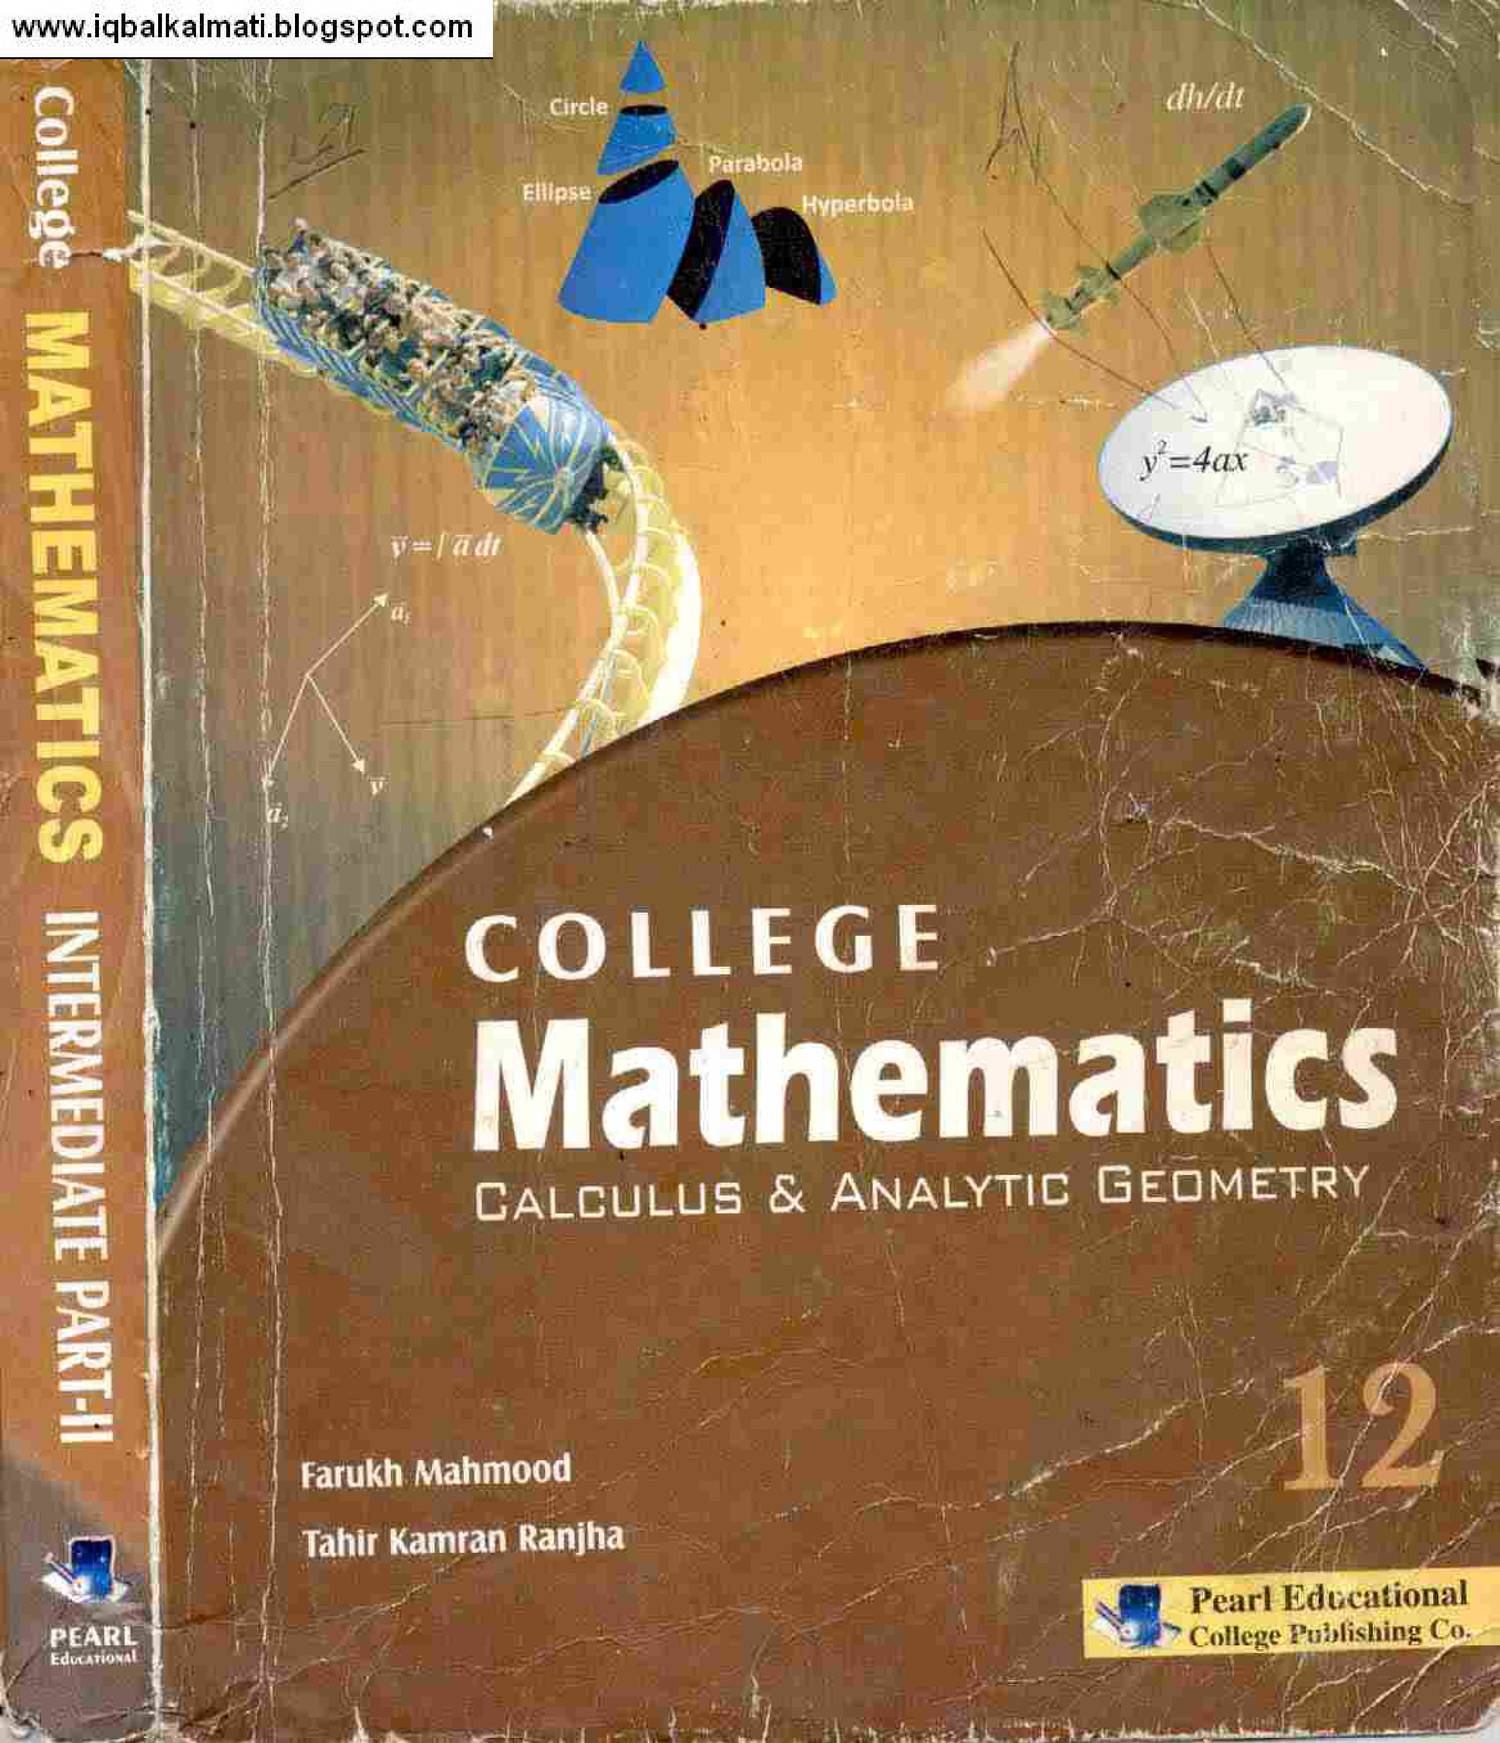 College Mathematics 2.pdf | DocDroid